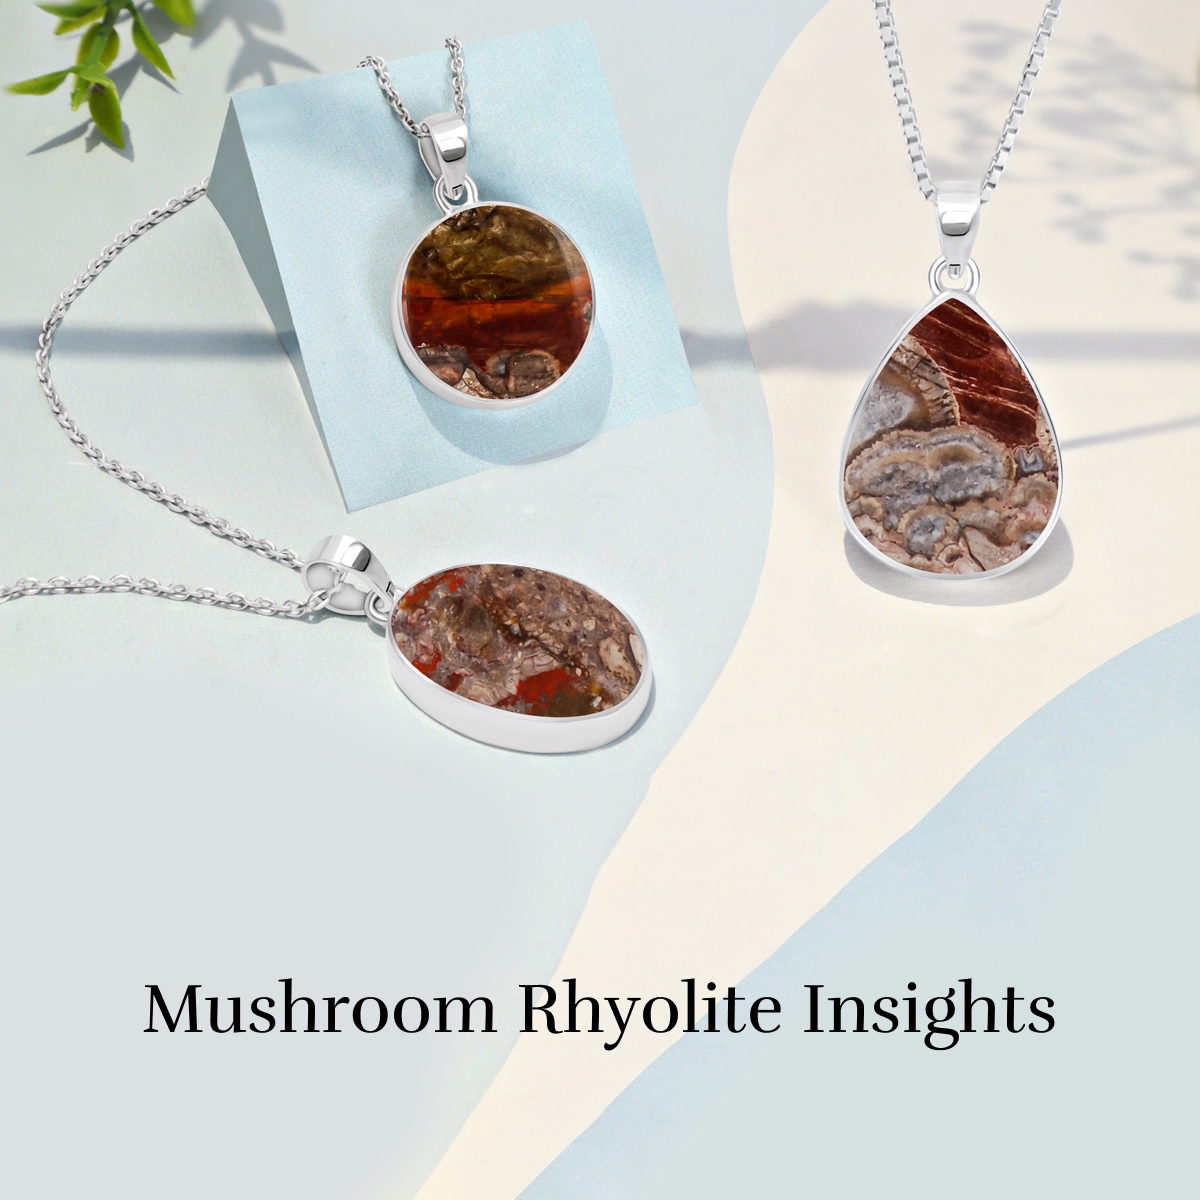 Mushroom Rhyolite Facts